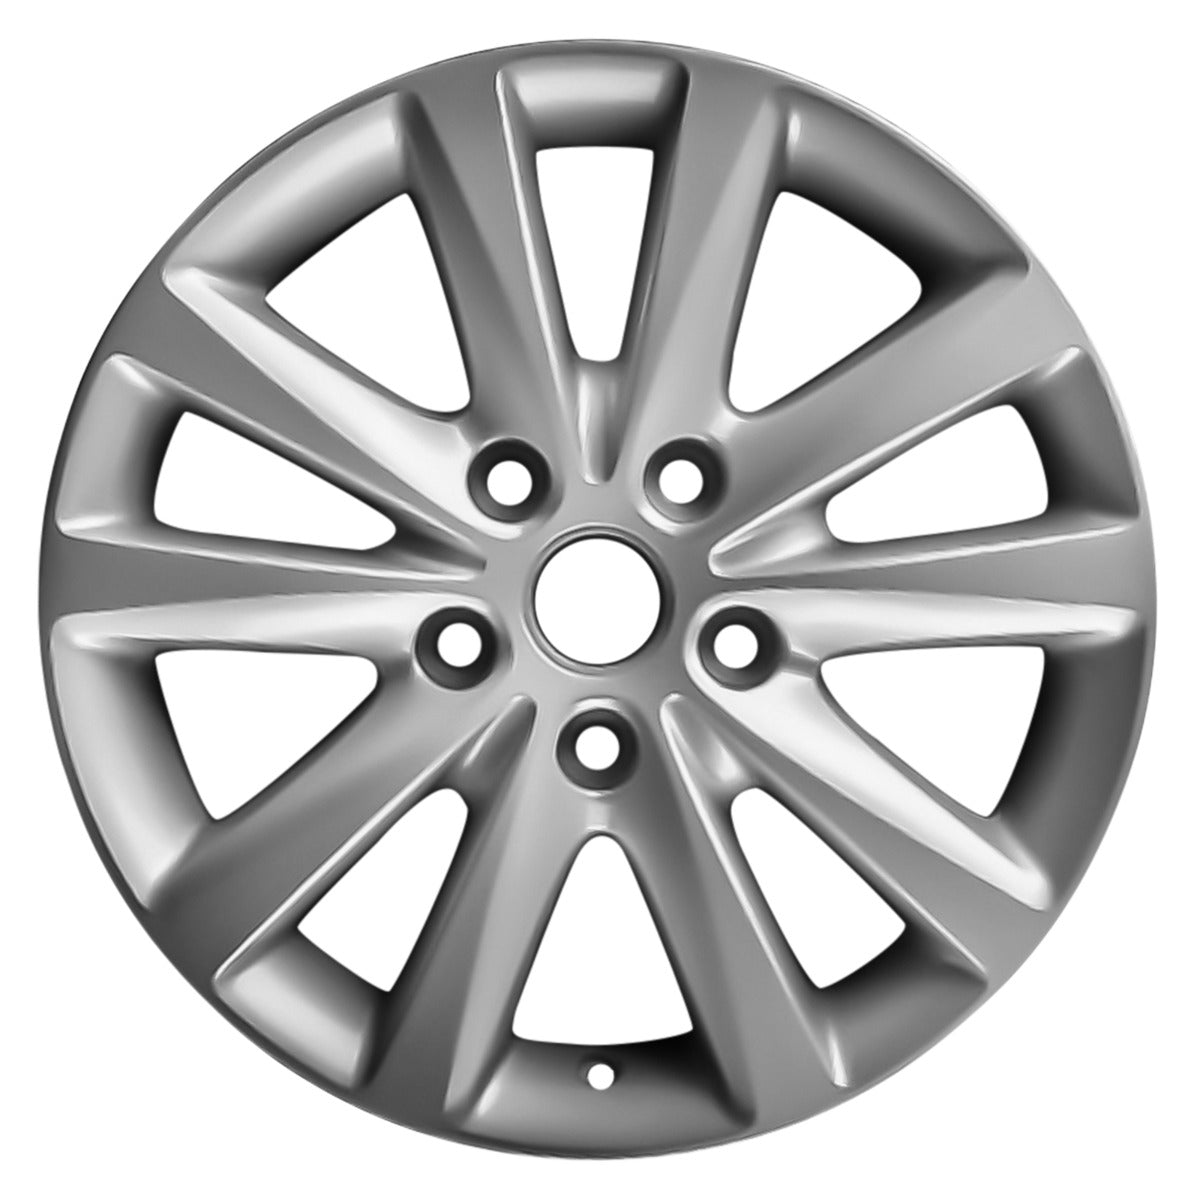 2015 Chrysler Town & Country 17" OEM Wheel Rim W2531S